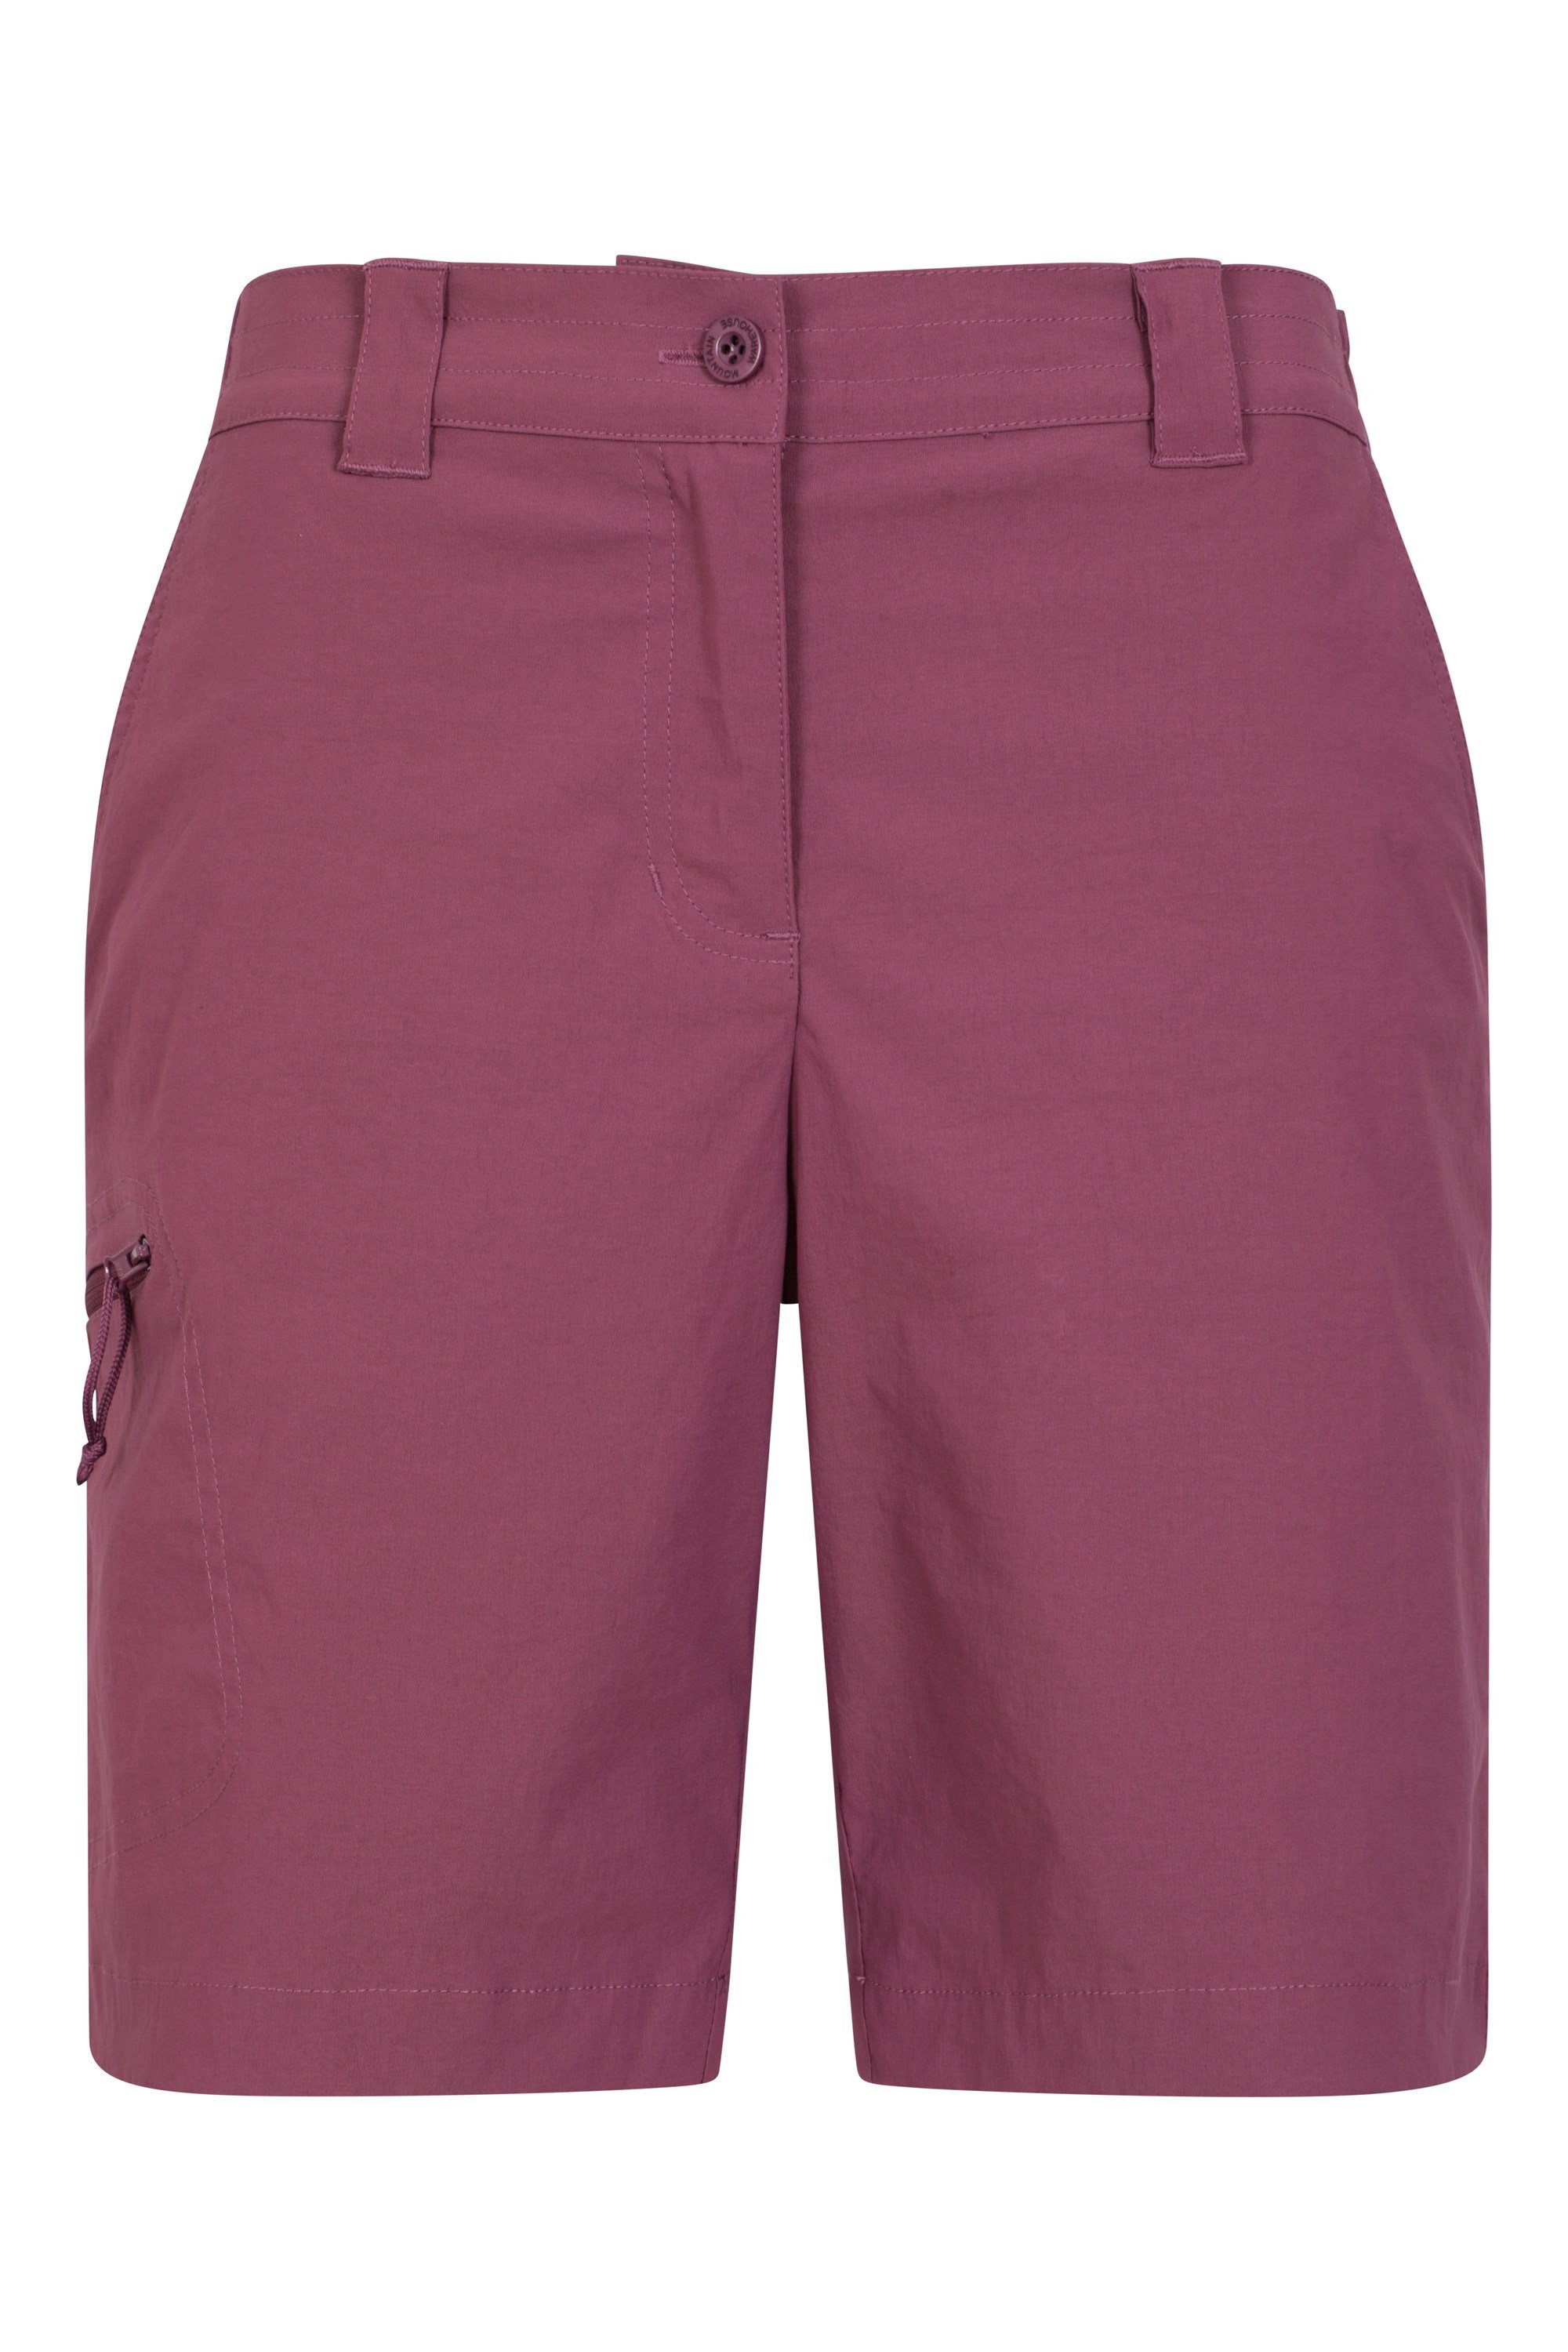 Hiker Stretch Womens Shorts - Pink